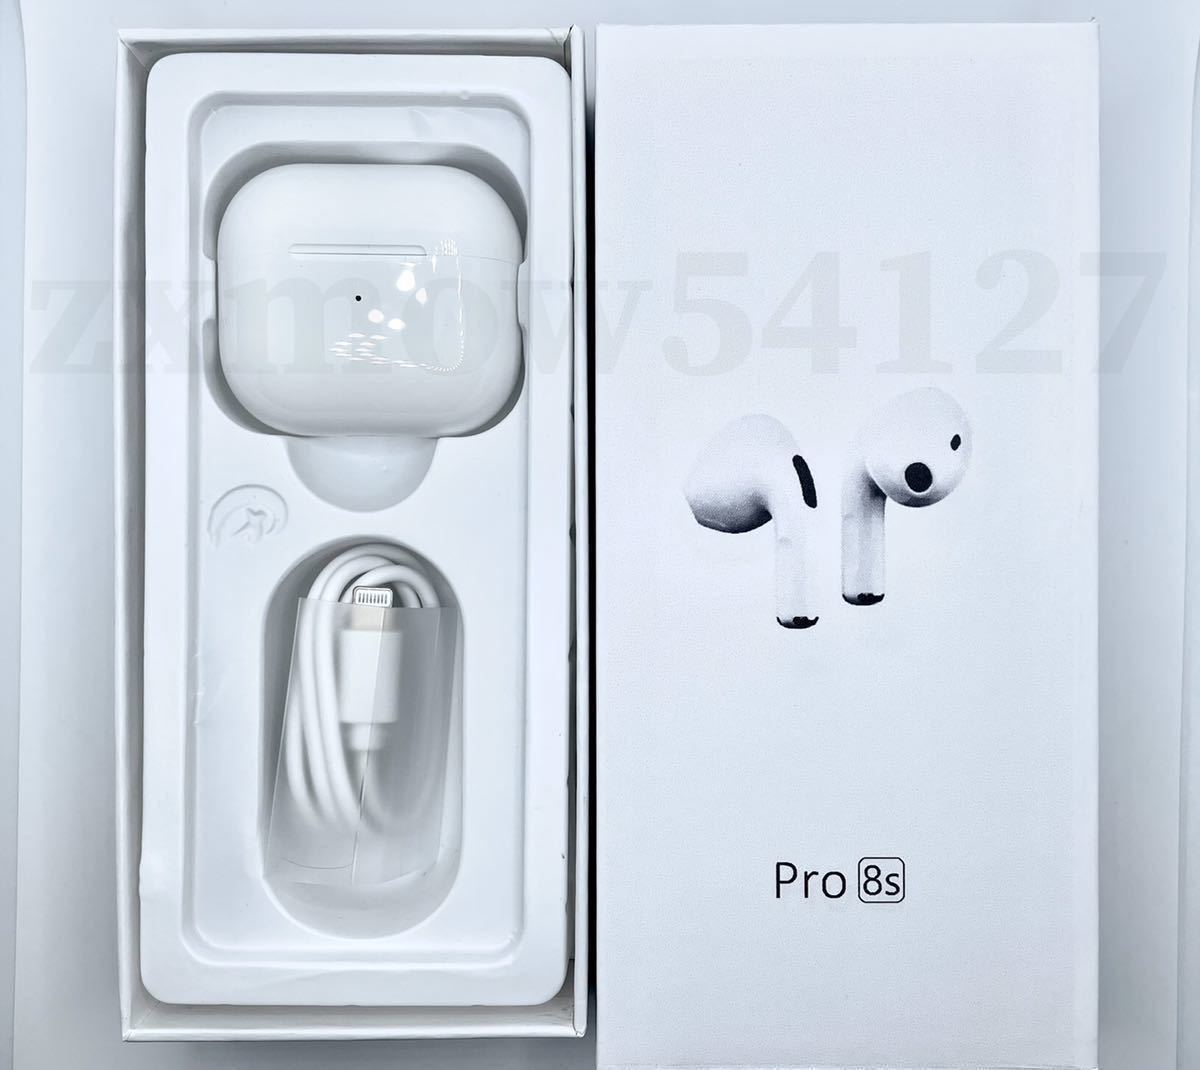 【 Pro8s 】AirPods Pro型 Pro8s イヤホン TWS 充電ケース付 ワイヤレスイヤホン Android iPhone8 X 11  12 Bluetooth 高音質